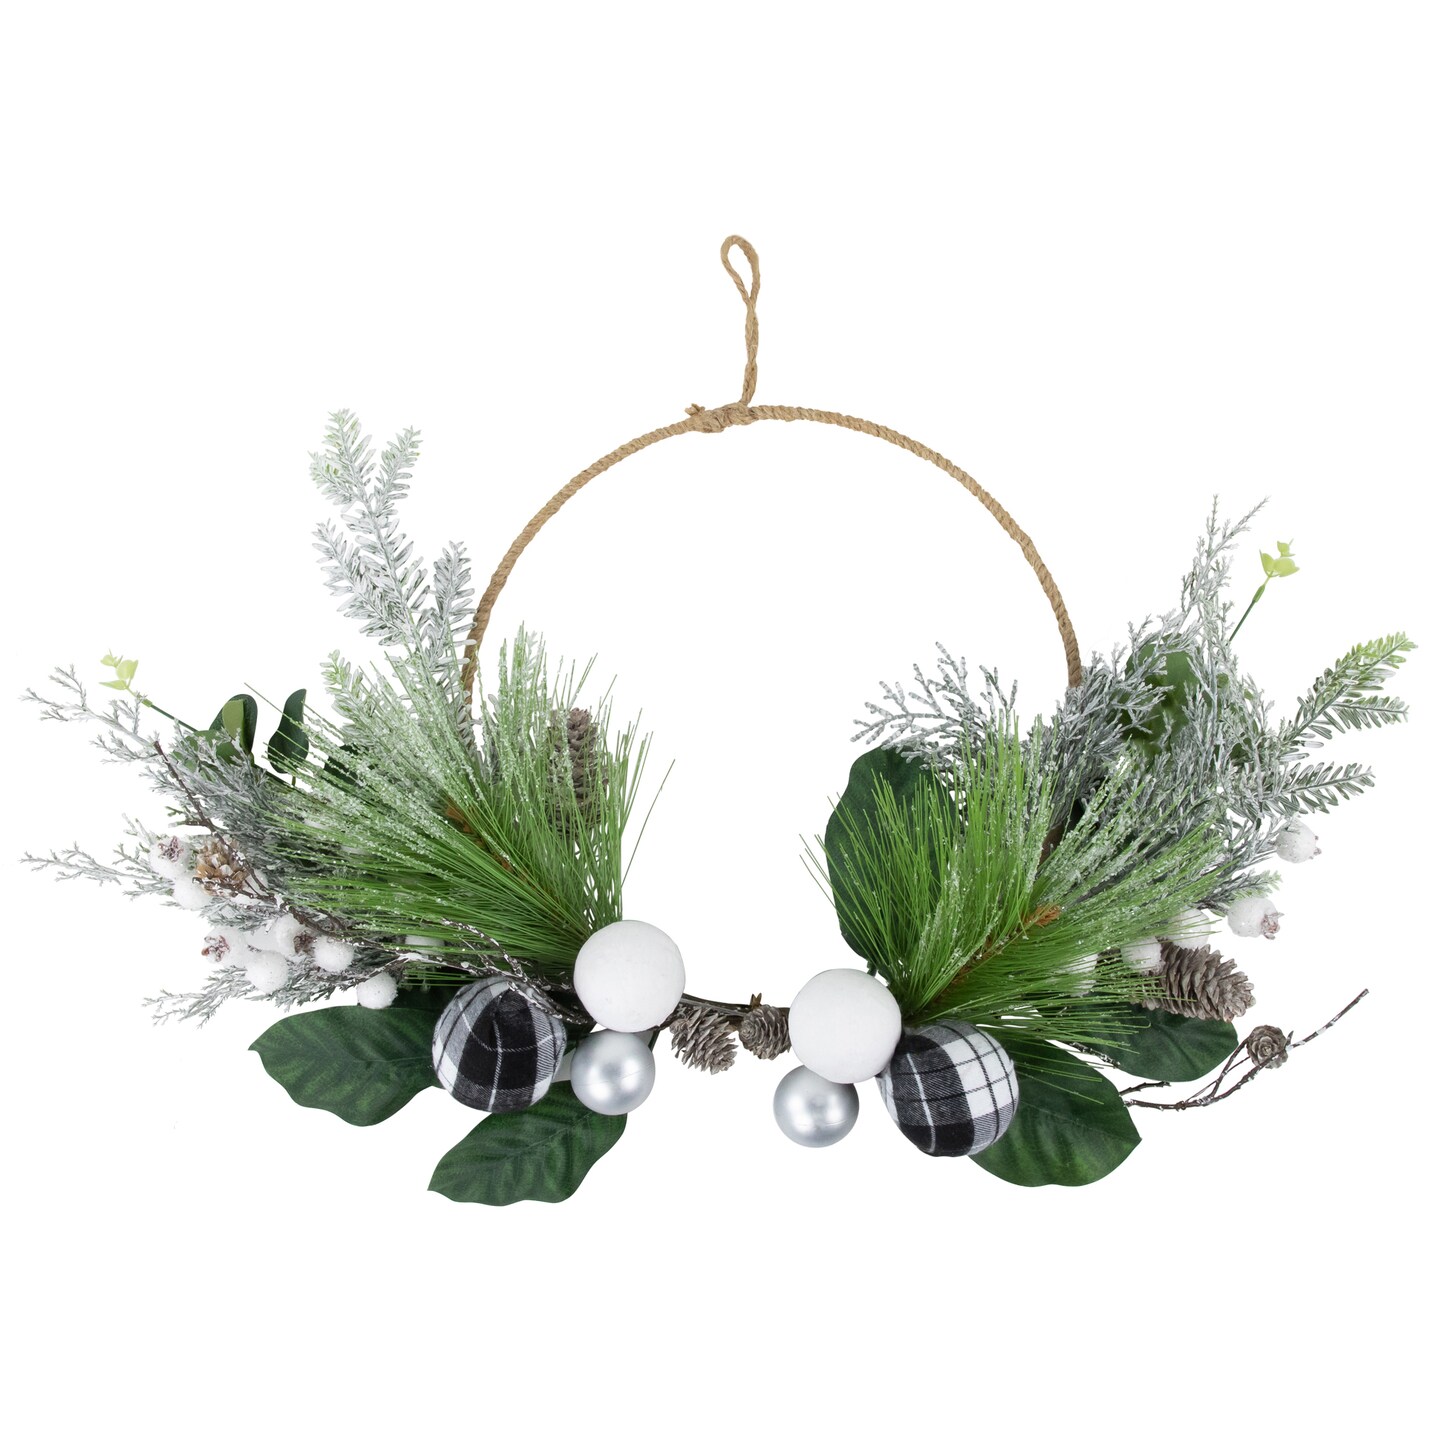 How to Make a Winter Greenery Wreath